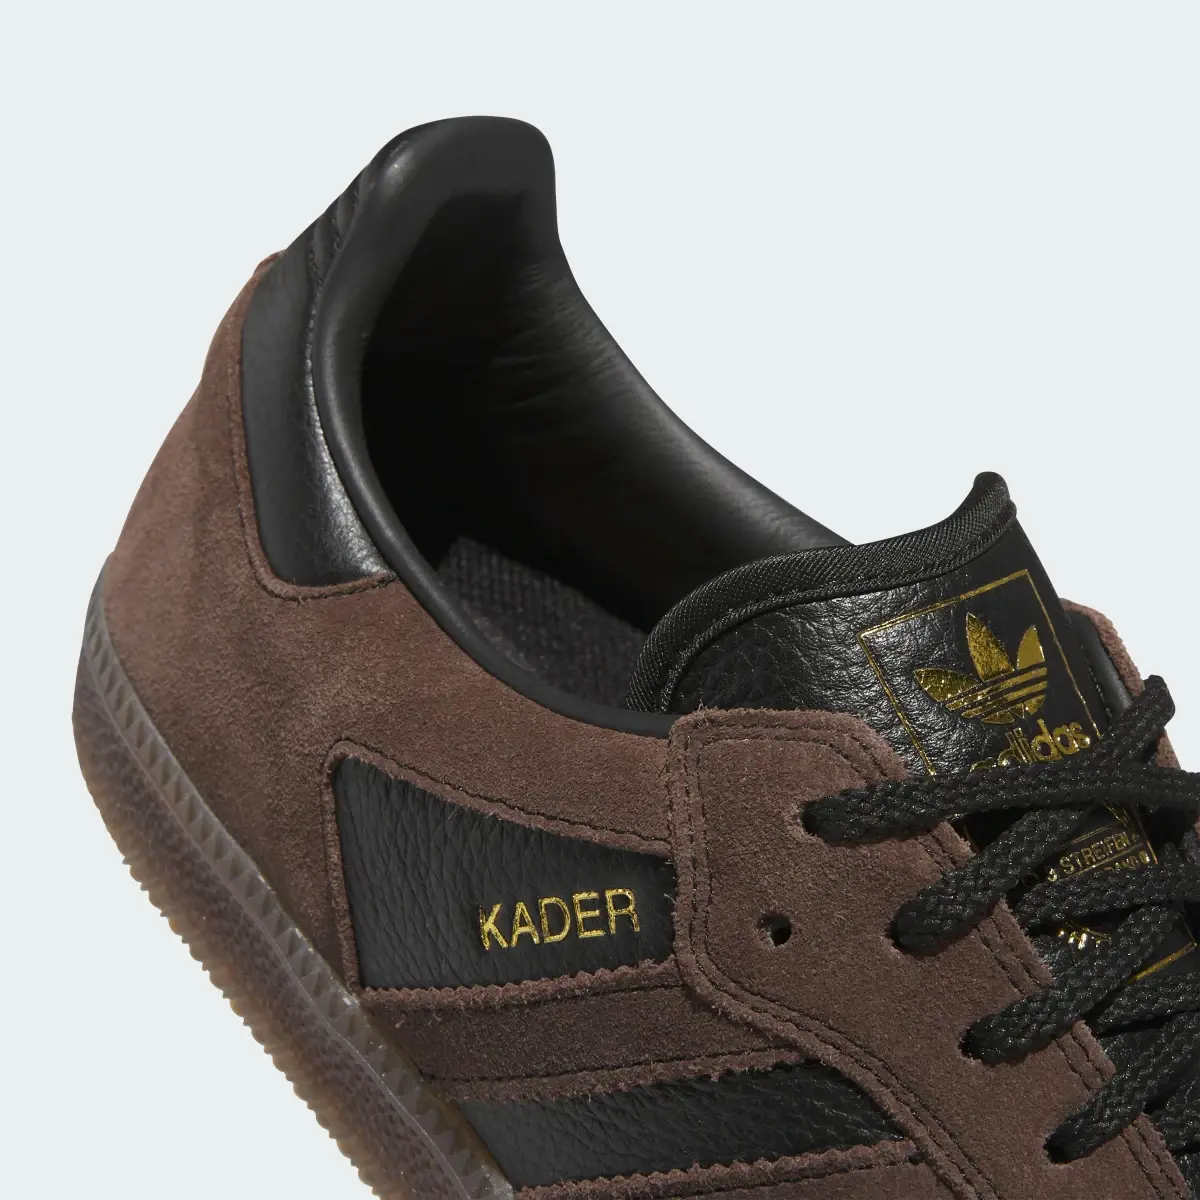 Adidas Samba ADV x Kader Shoes. 3